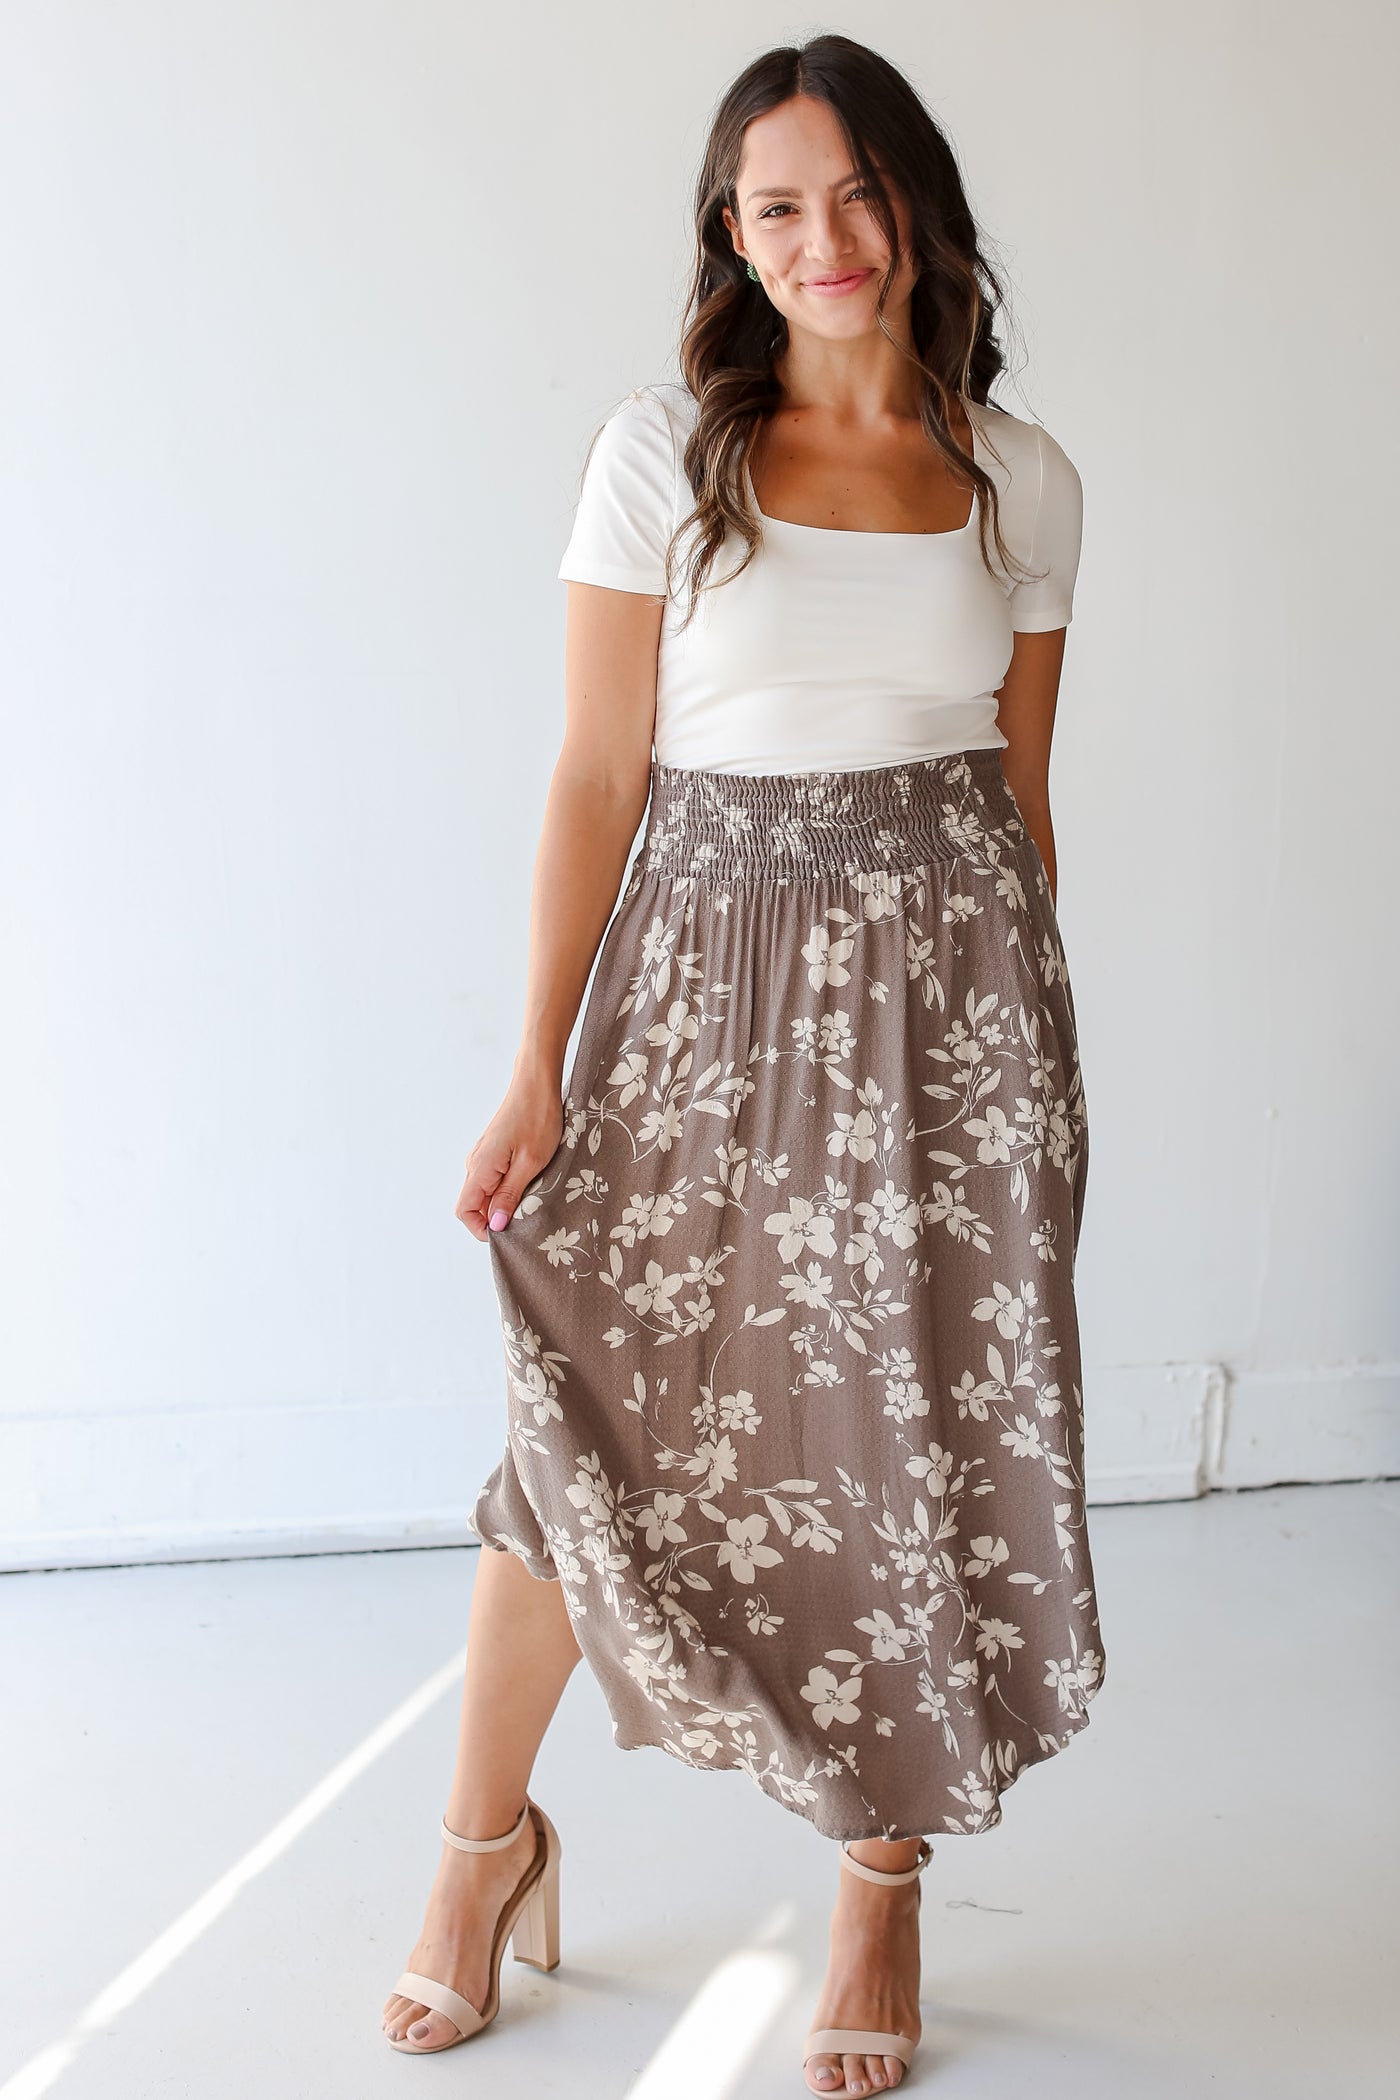 Floral Midi Skirt on dress up model